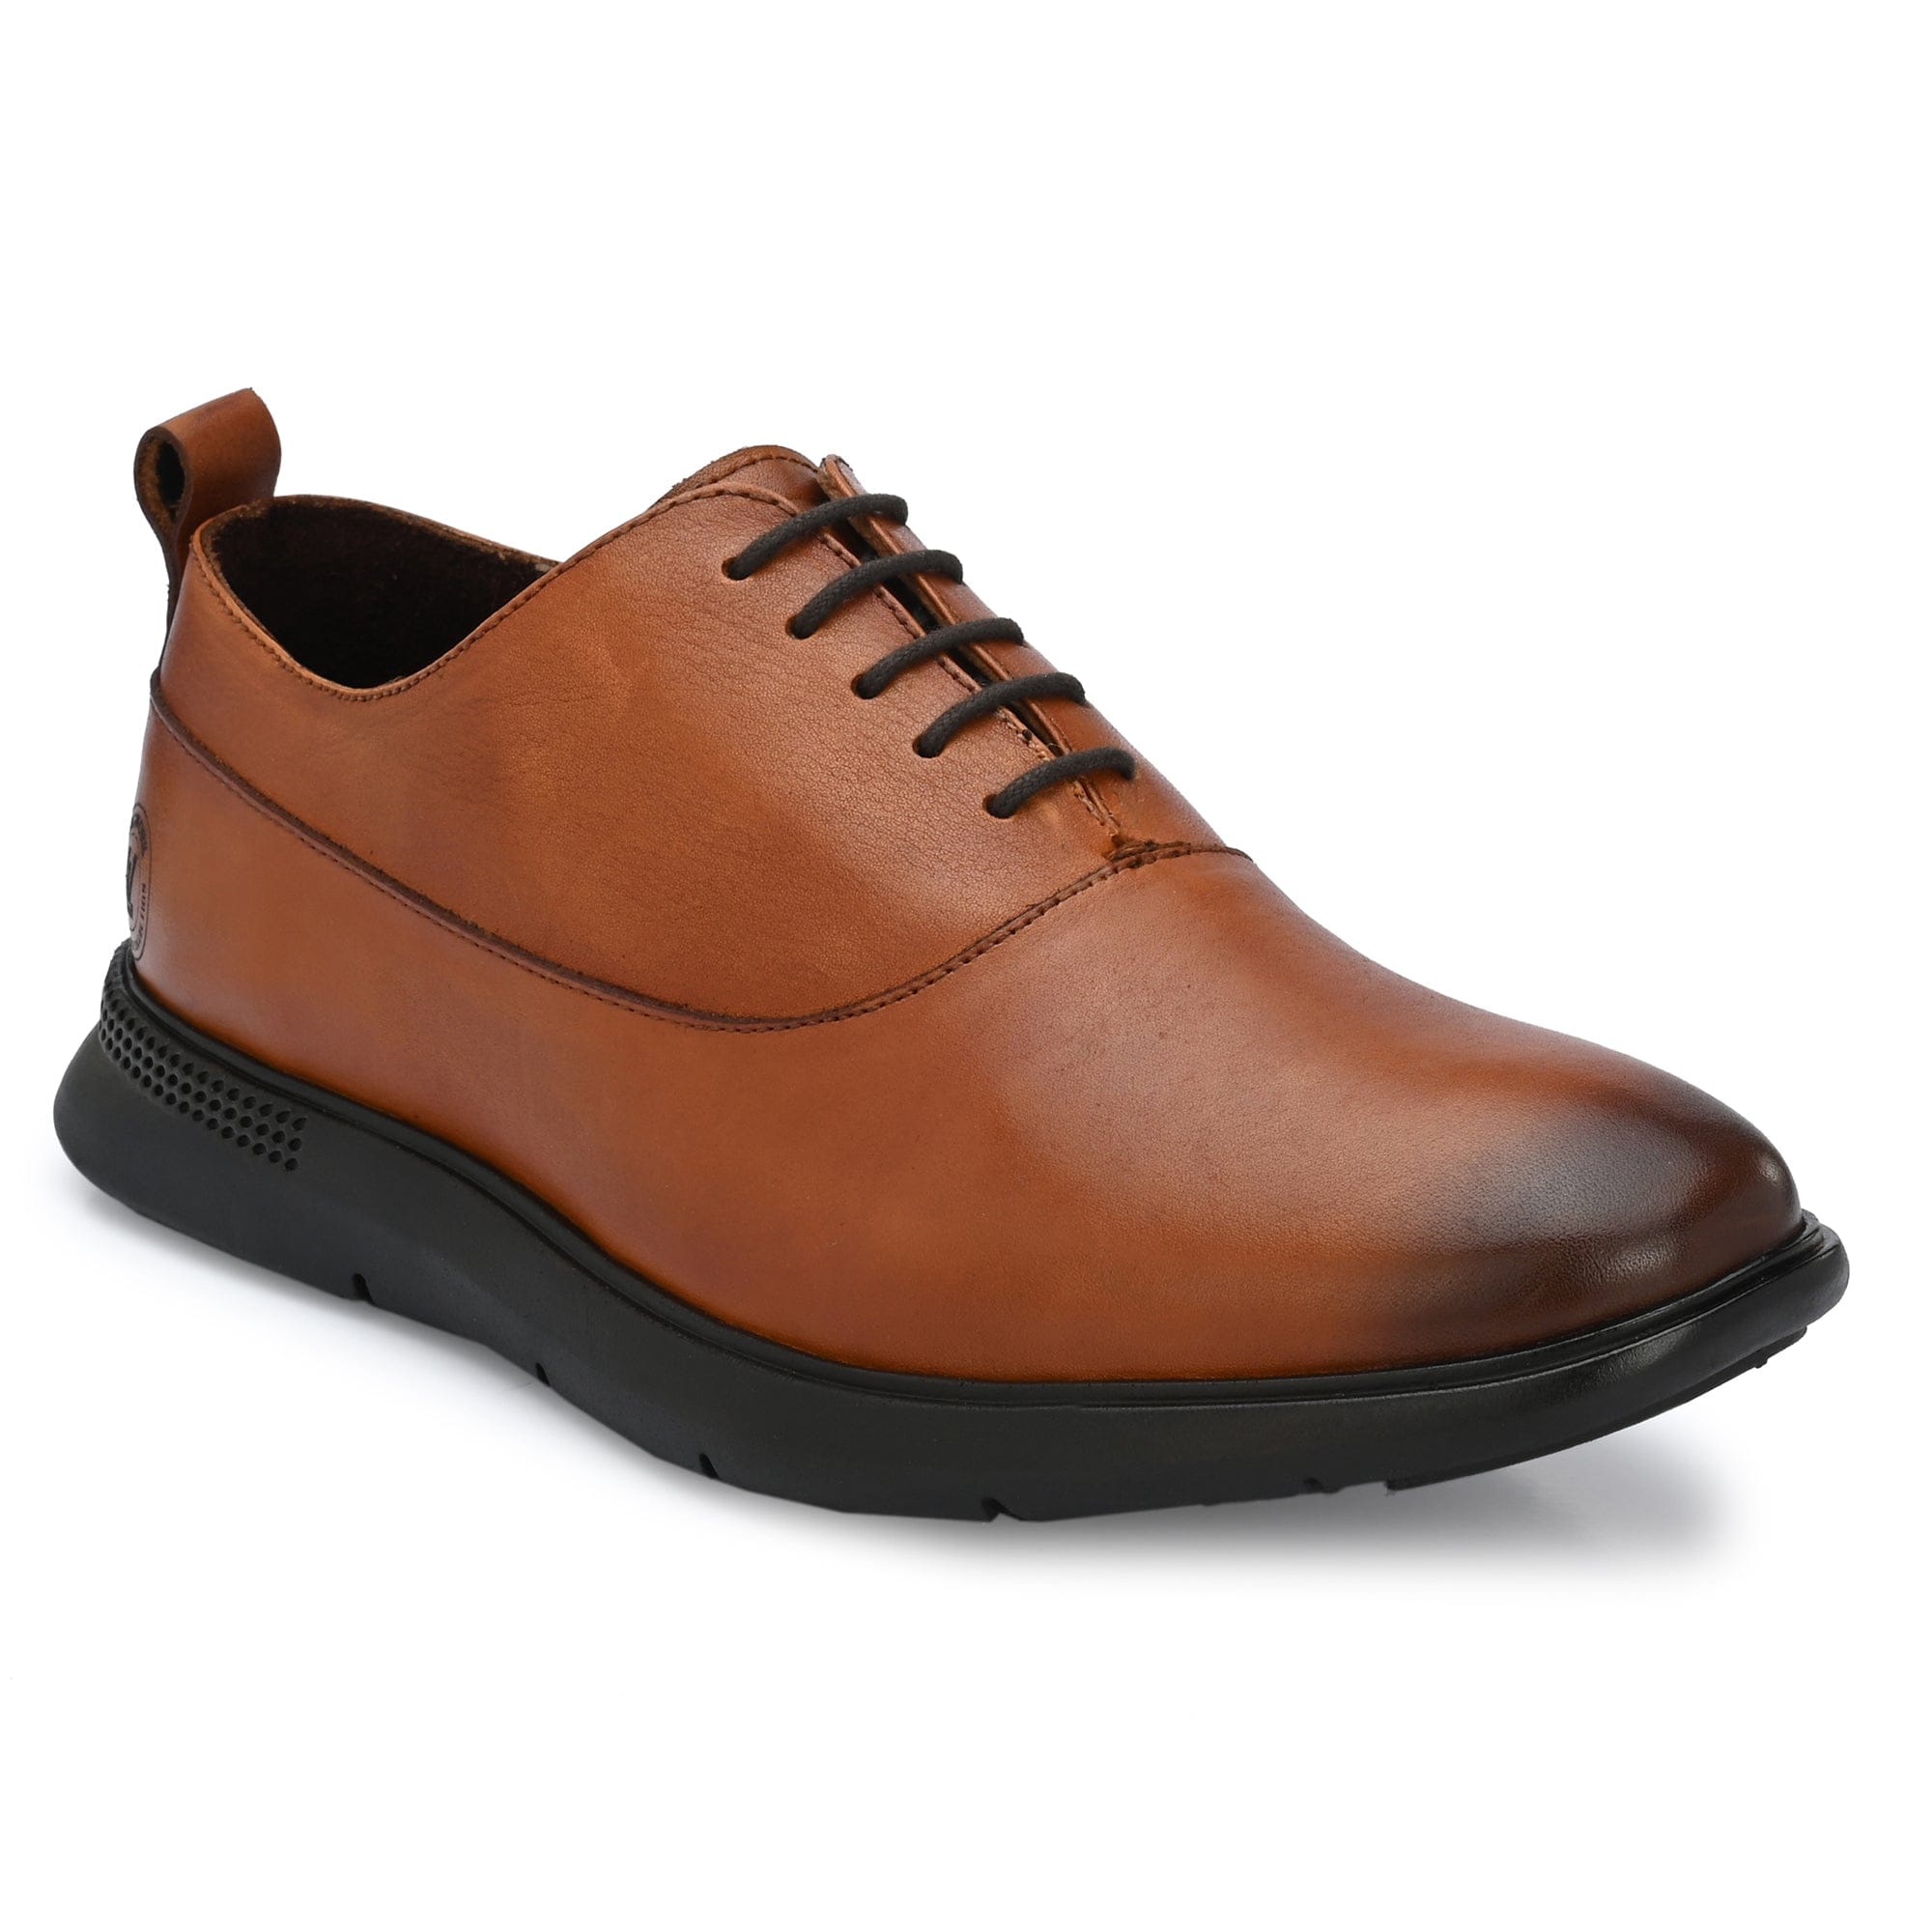 Legwork Crossover Tan Italian Leather Shoes